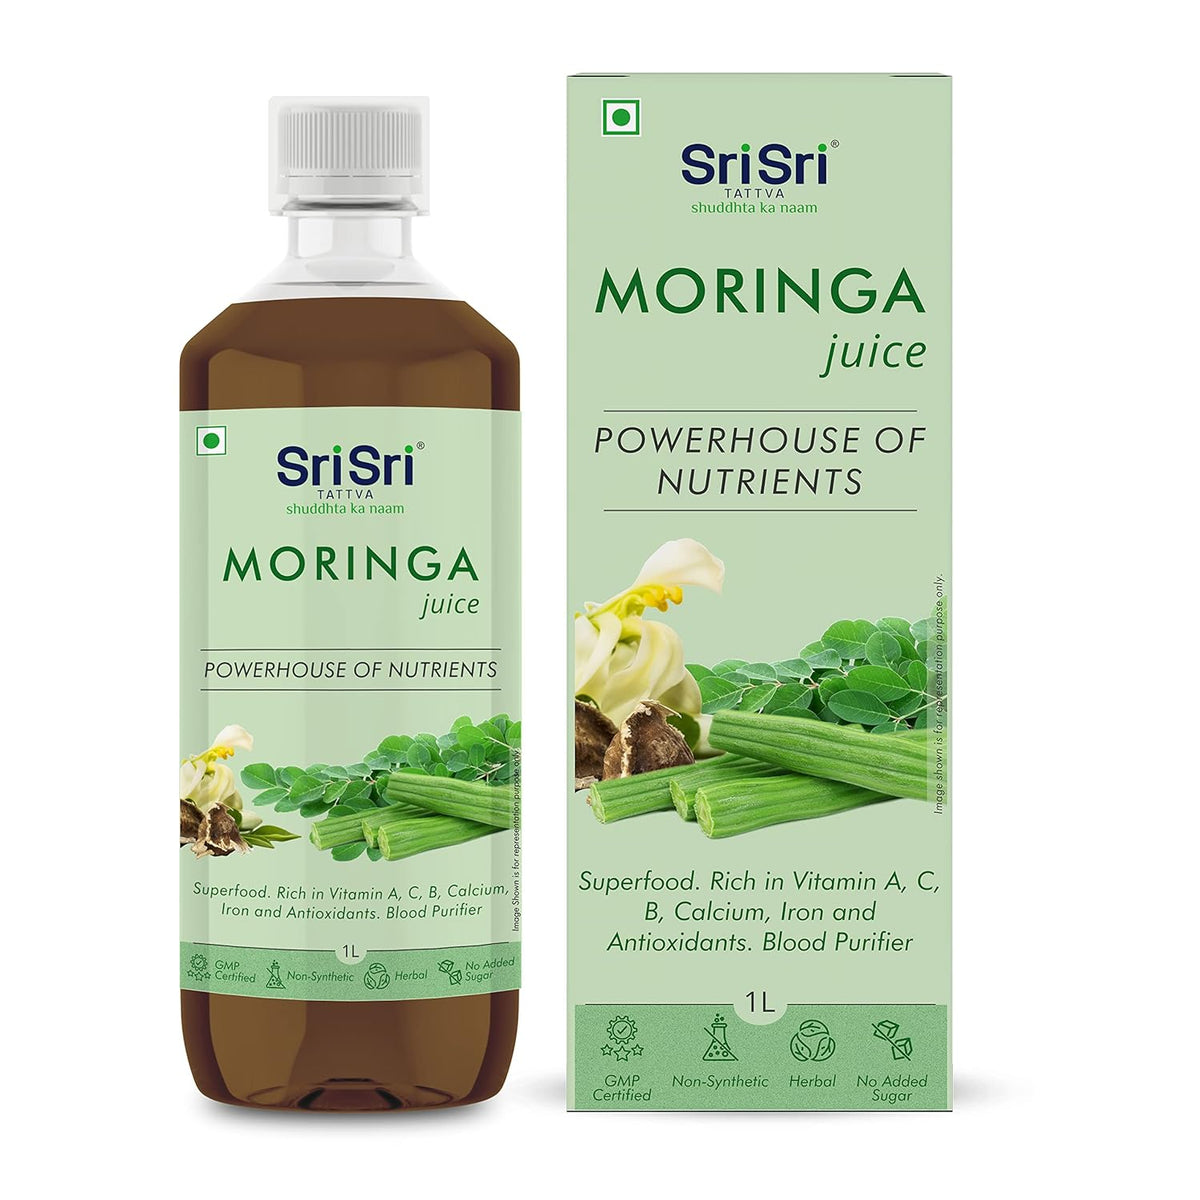 Sri Sri Tattva Ayurvedic Moringa Juice Powerhouse of Nutrients Liquid 1 Litre